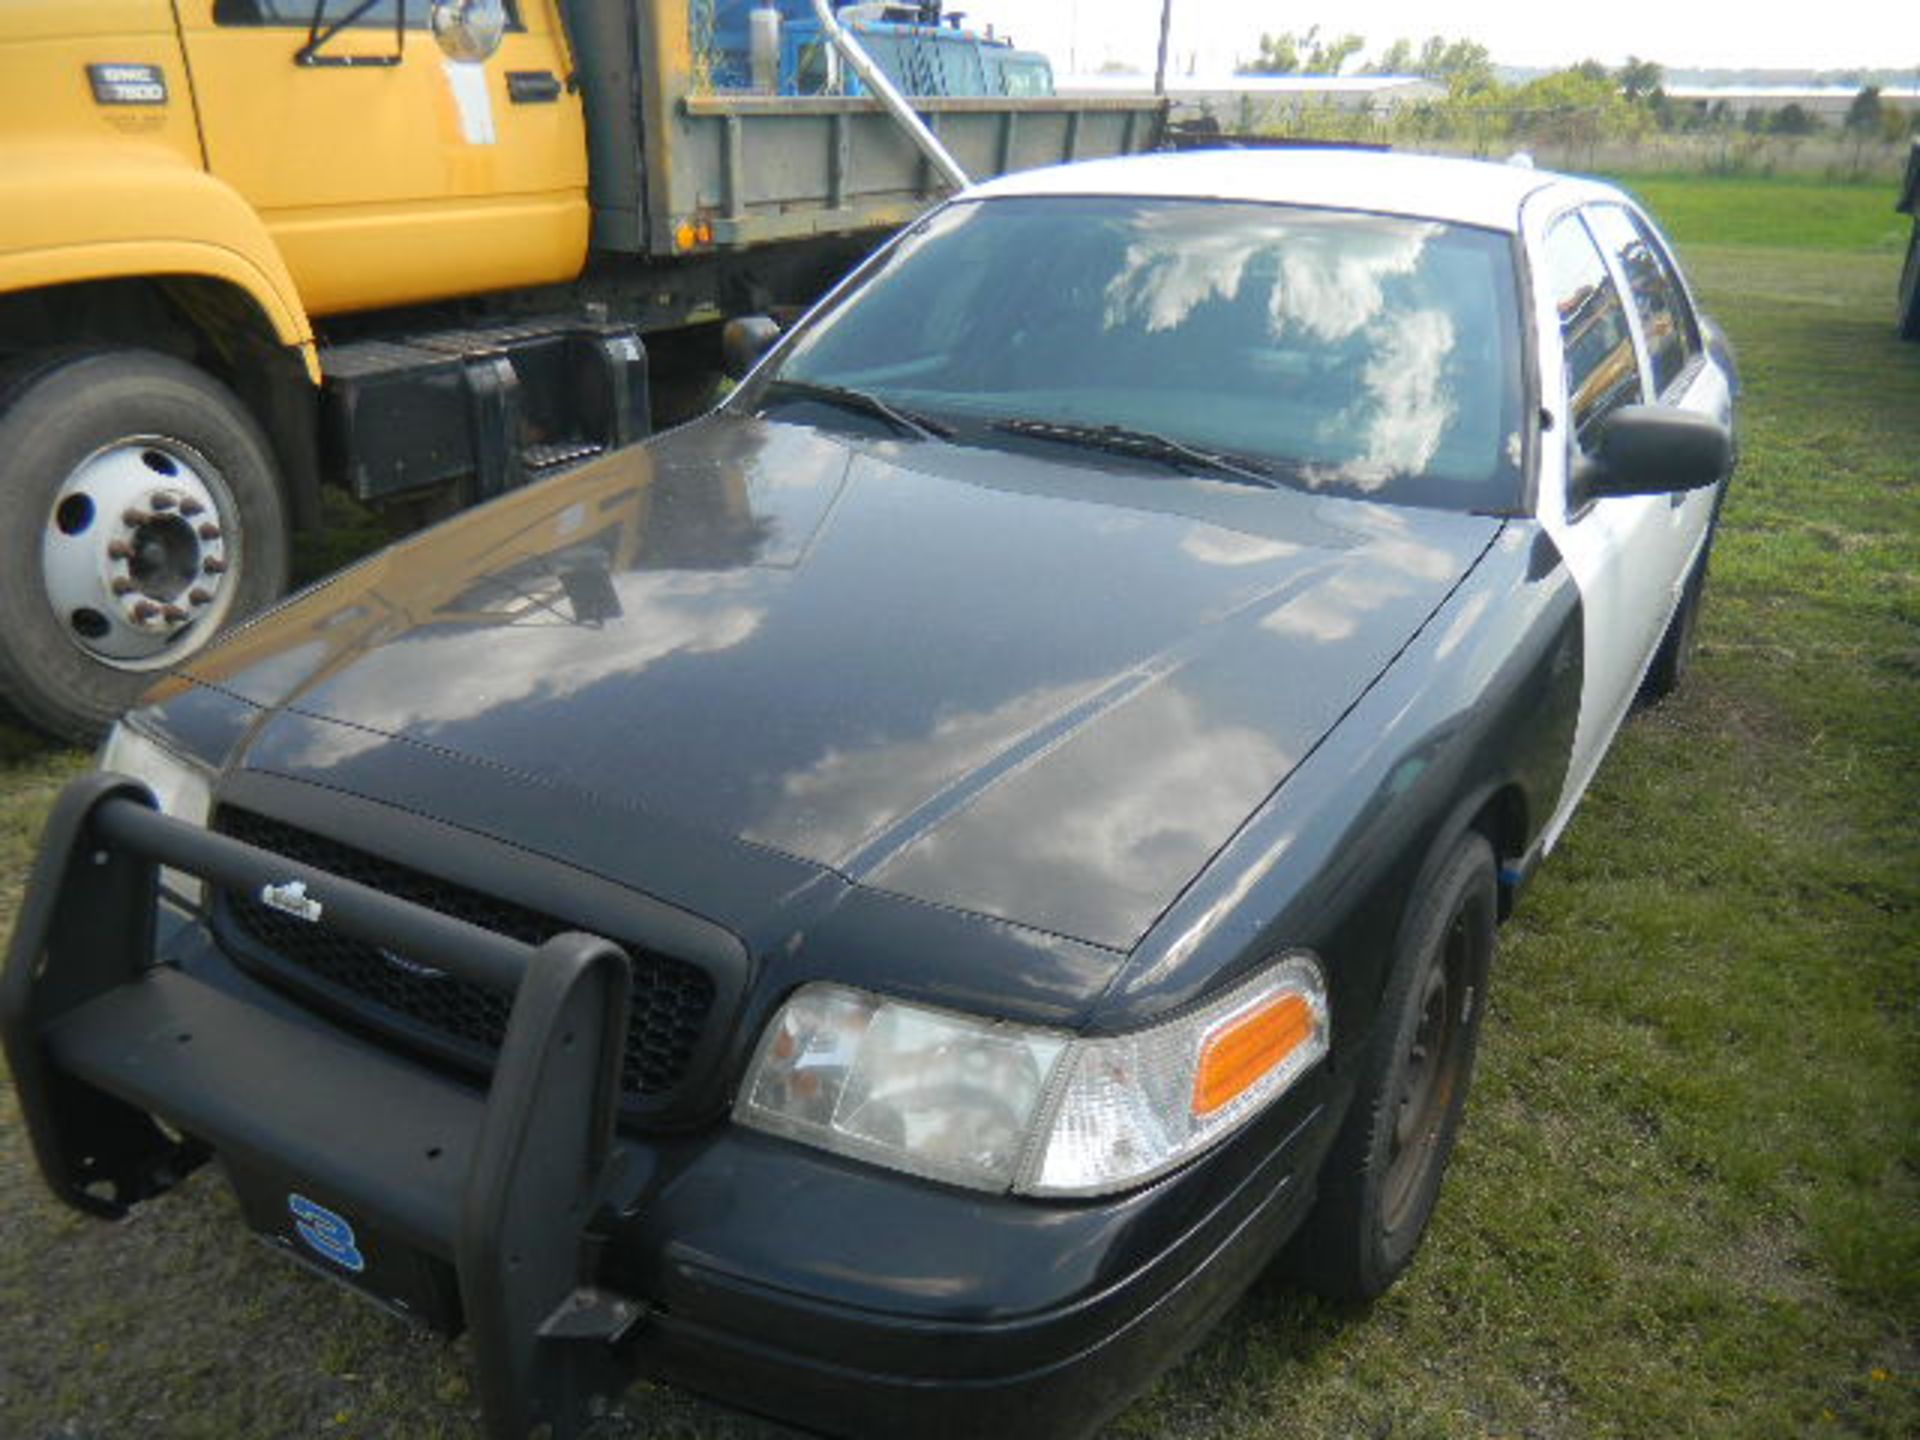 2008 Ford Crown Vic B/White Patrol Car - Asset I.D. #449 - Last of Vin (114900)